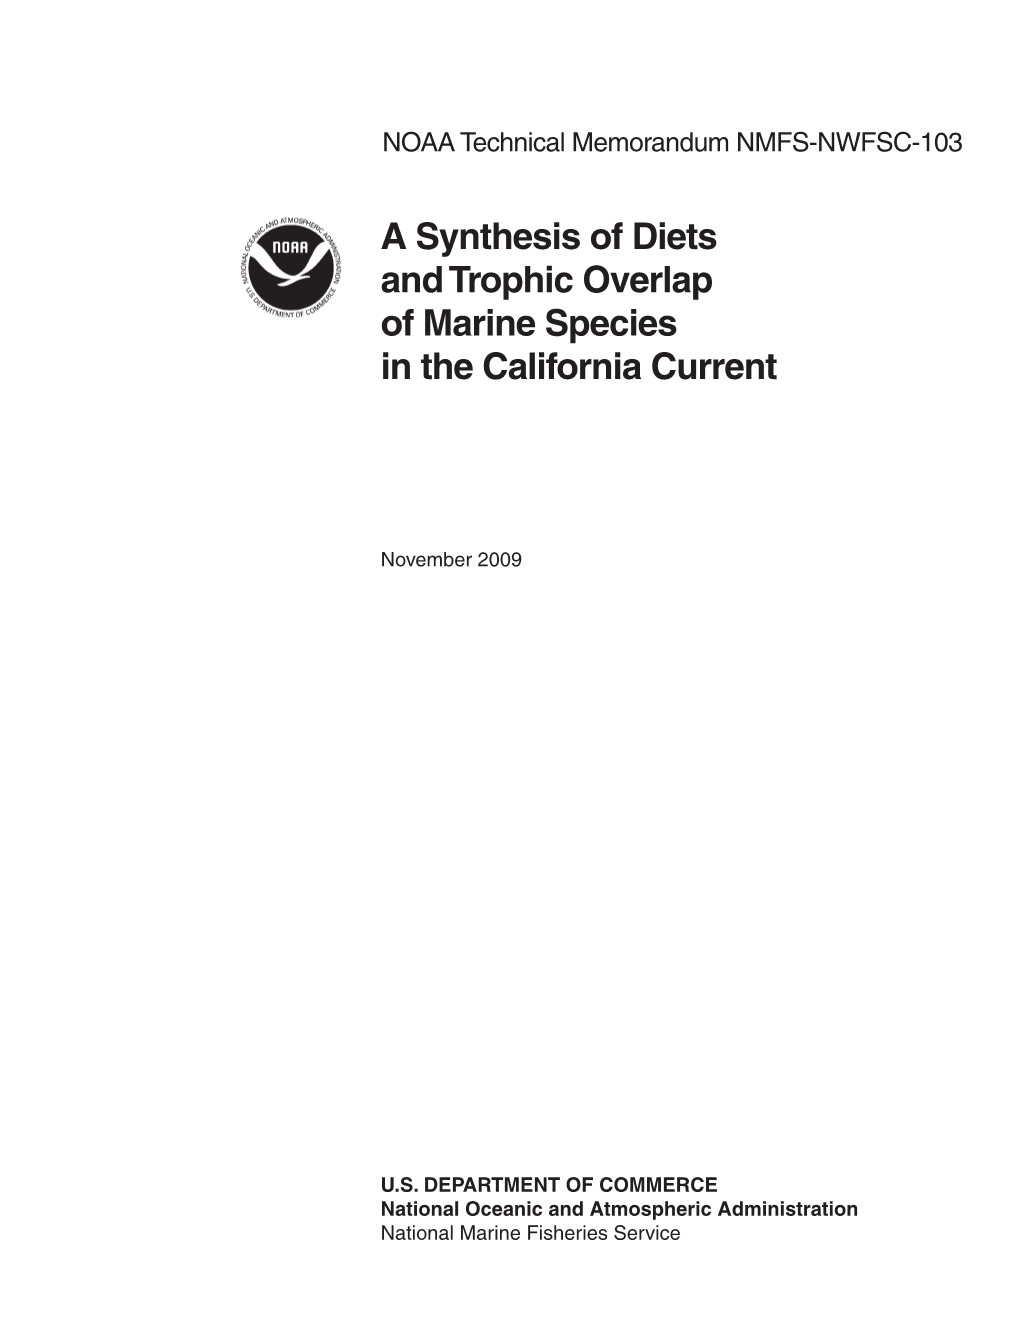 NOAA Technical Memorandum NMFS-NWFSC-103. a Synthesis Of